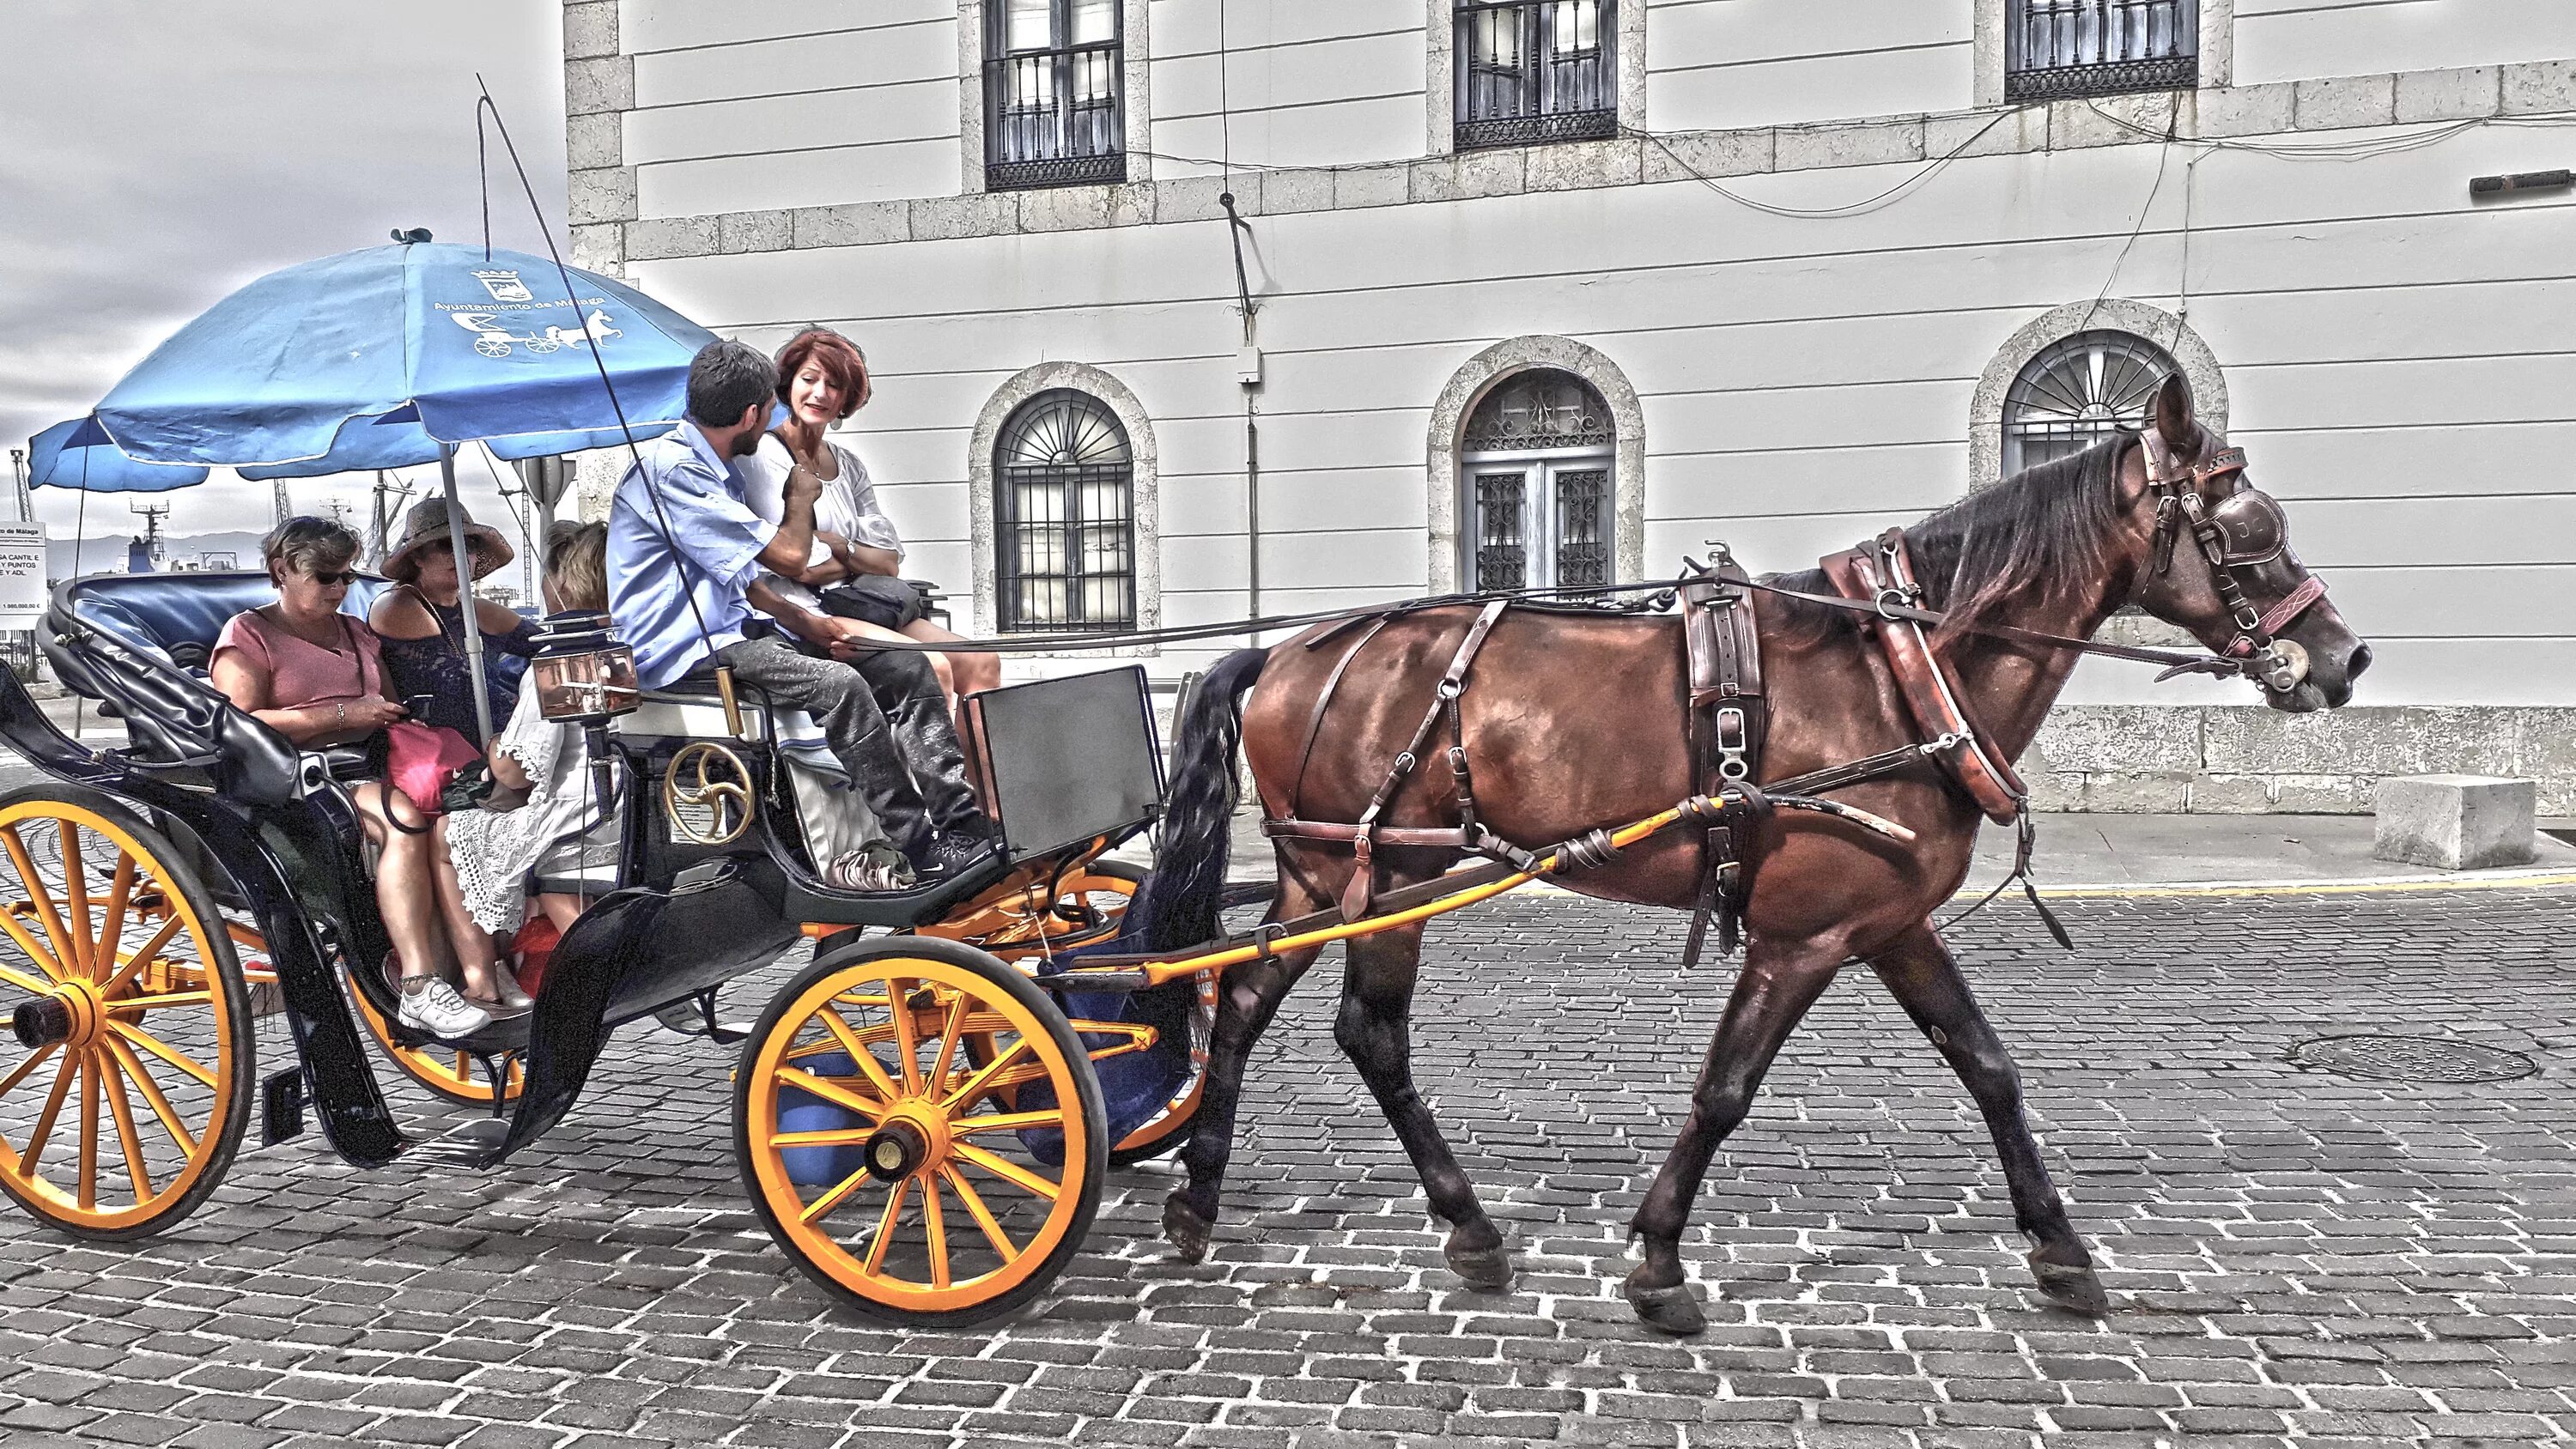 Передвижение лошади. Фаэтон карета. Фаэтон конный экипаж. Фаэтон в России карета 19 век. Рыдван карета.